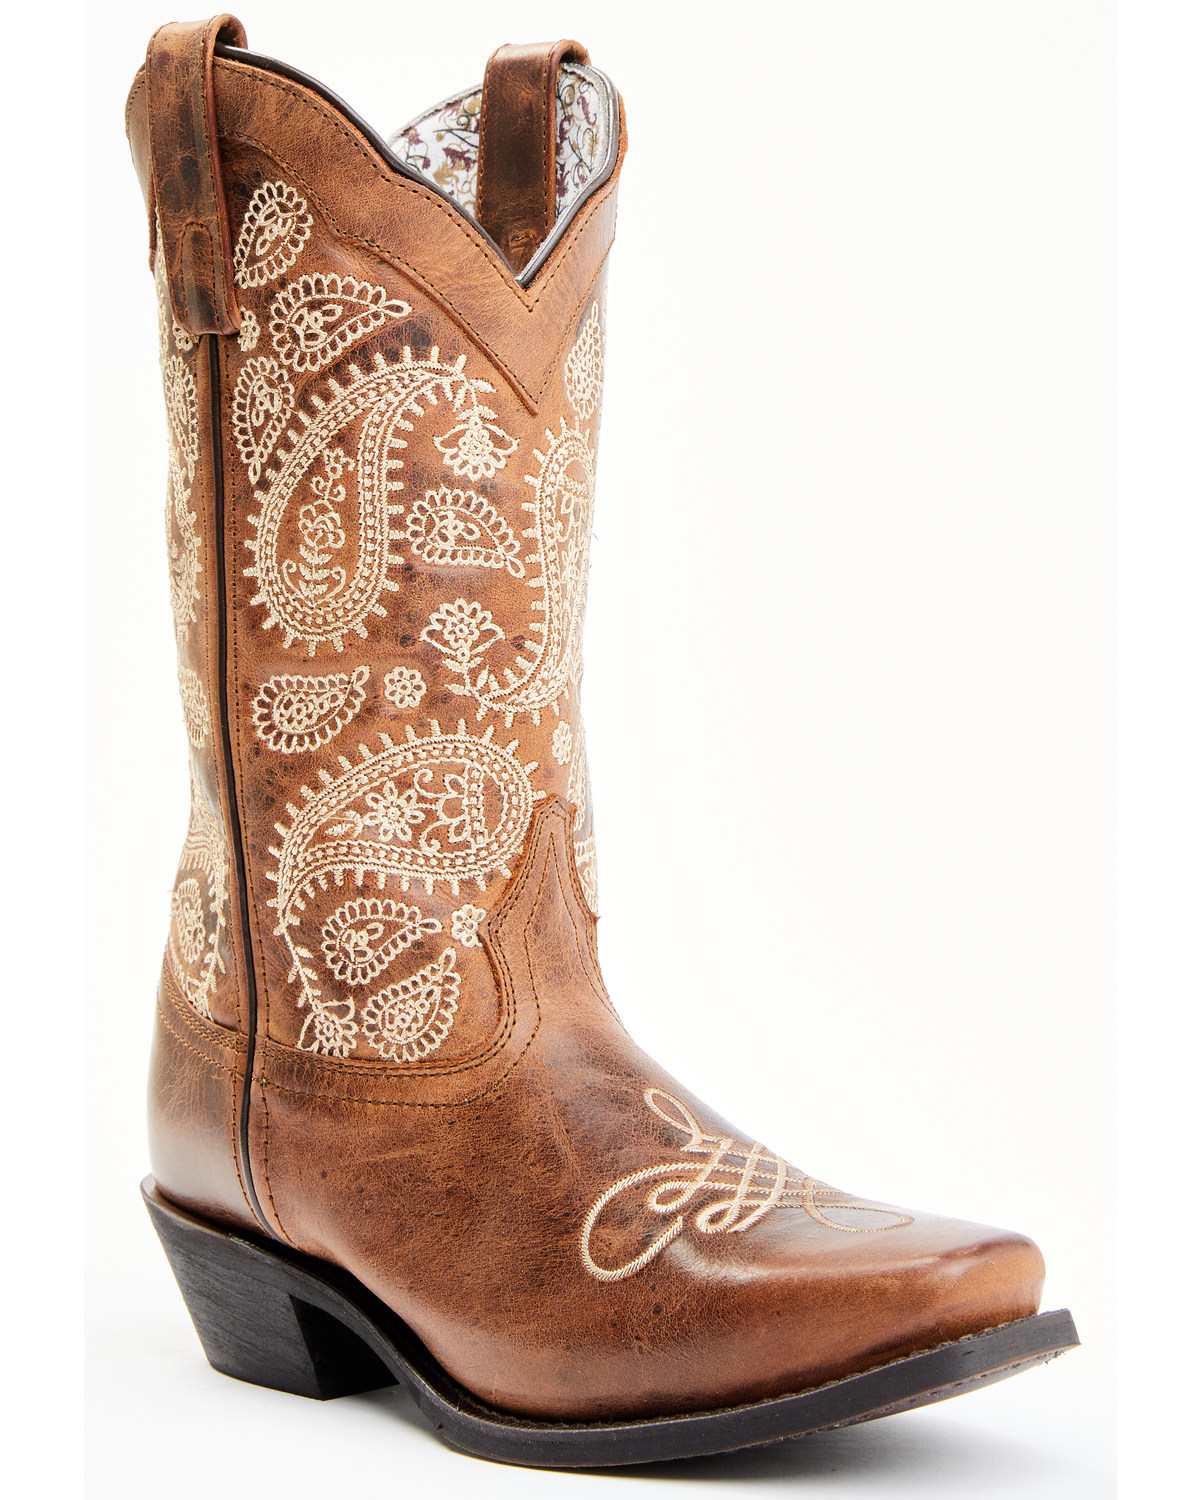 Laredo Women's Millie Western Boots - Square Toe